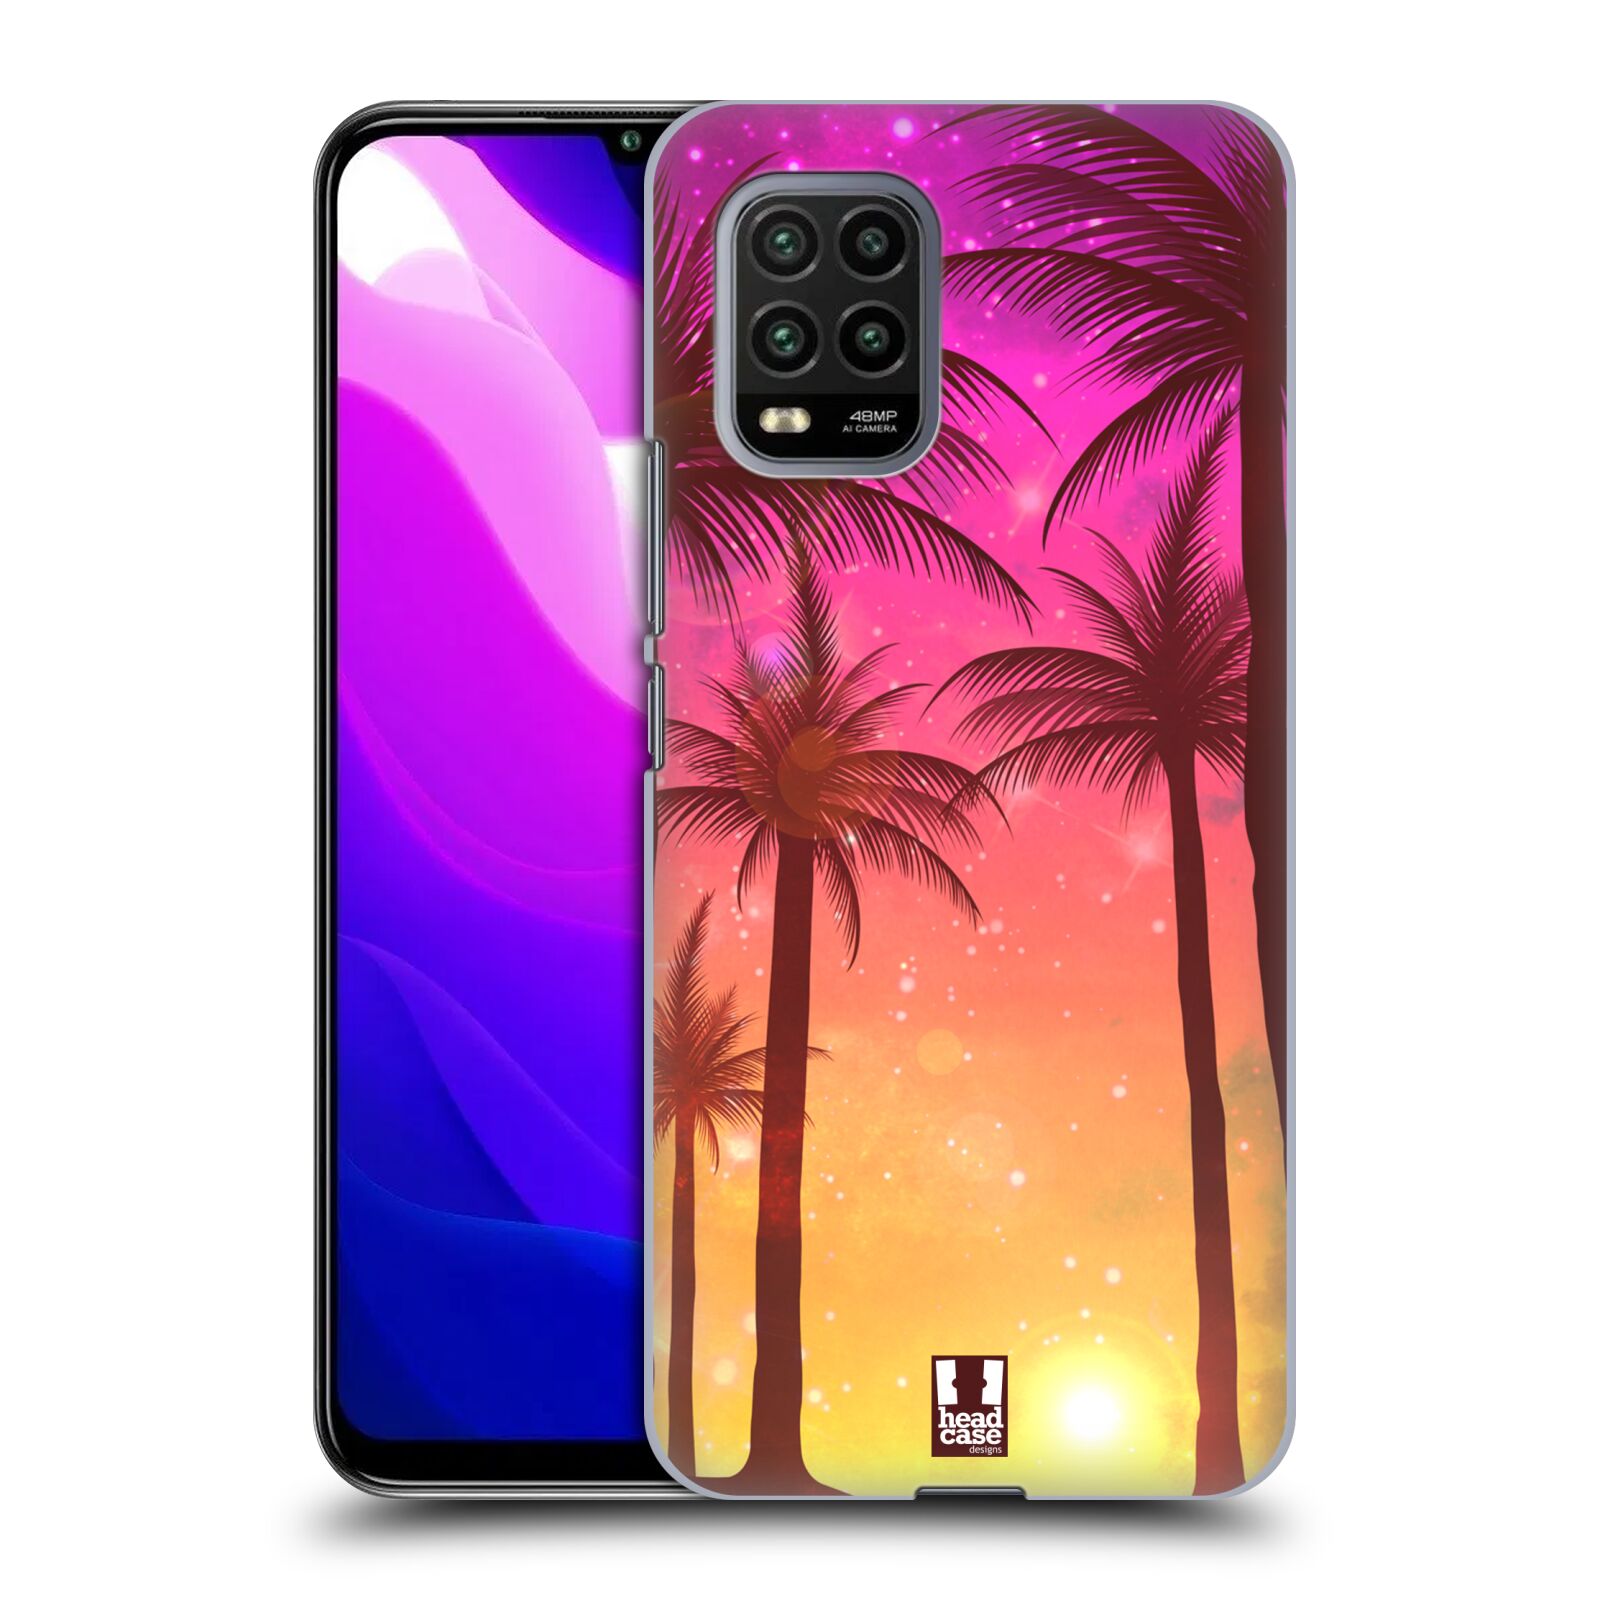 Zadní kryt, obal na mobil Xiaomi Mi 10 LITE vzor Kreslený motiv silueta moře a palmy RŮŽOVÁ